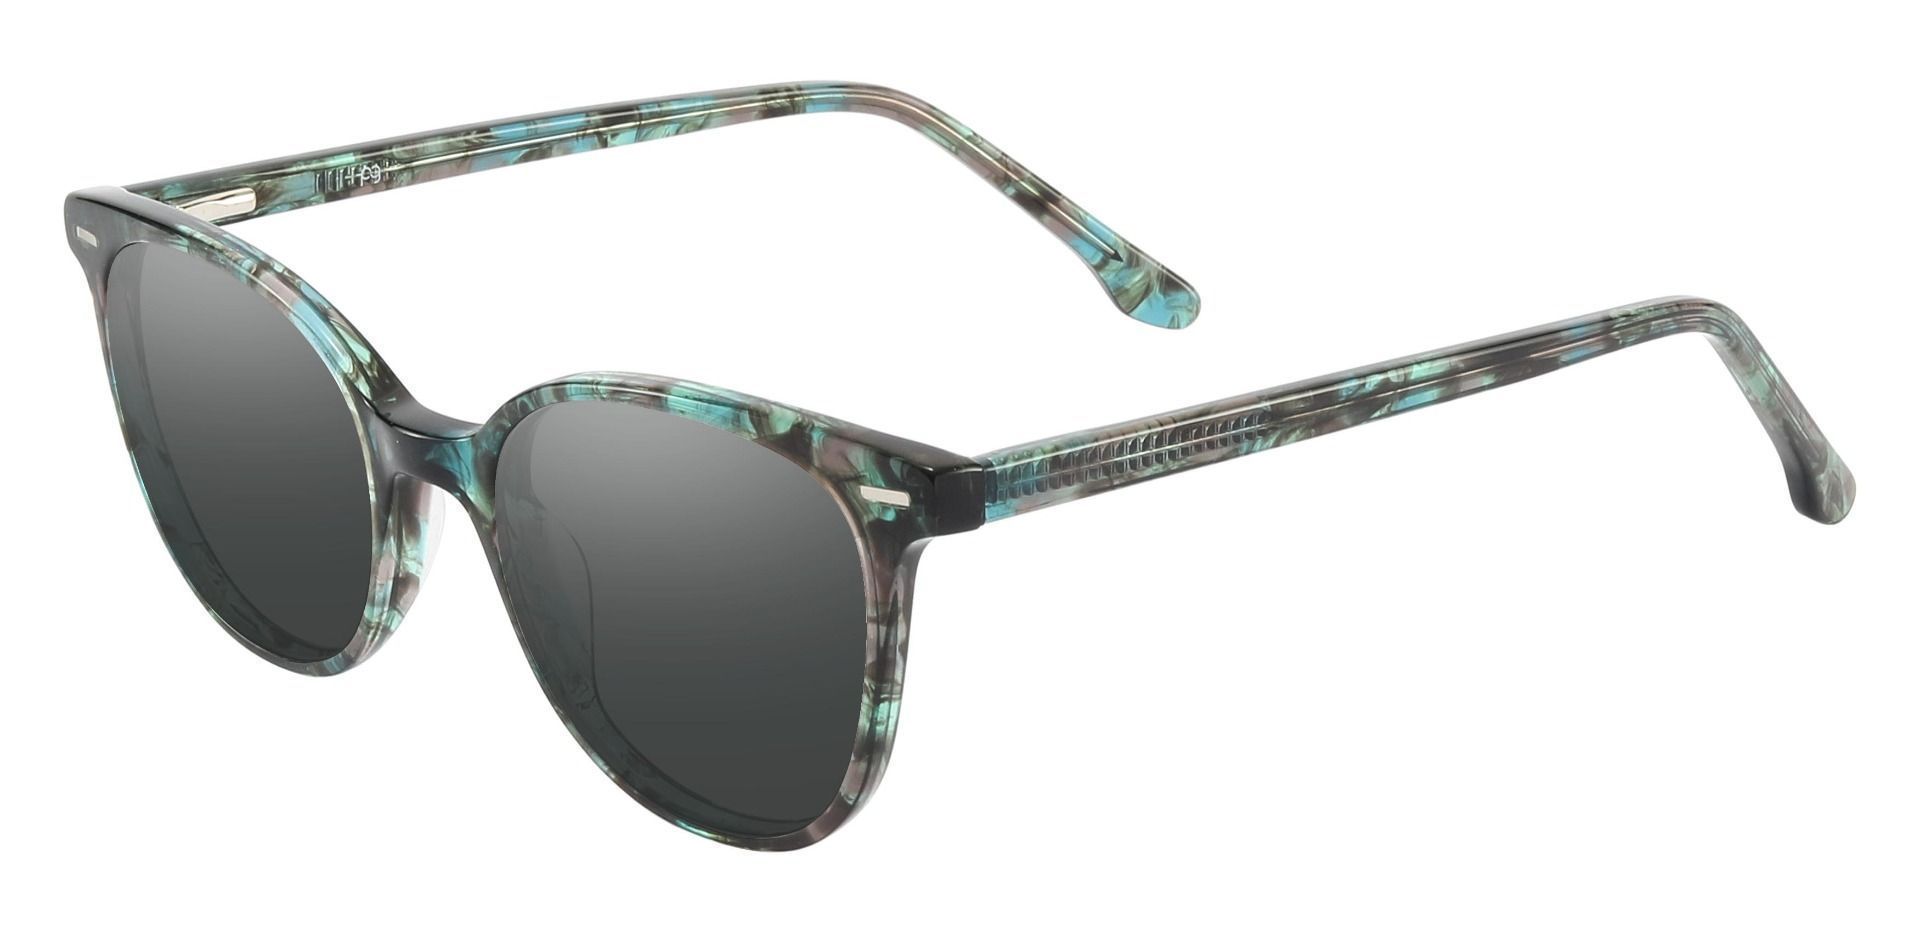 Chili Oval Progressive Sunglasses - Green Frame With Gray Lenses